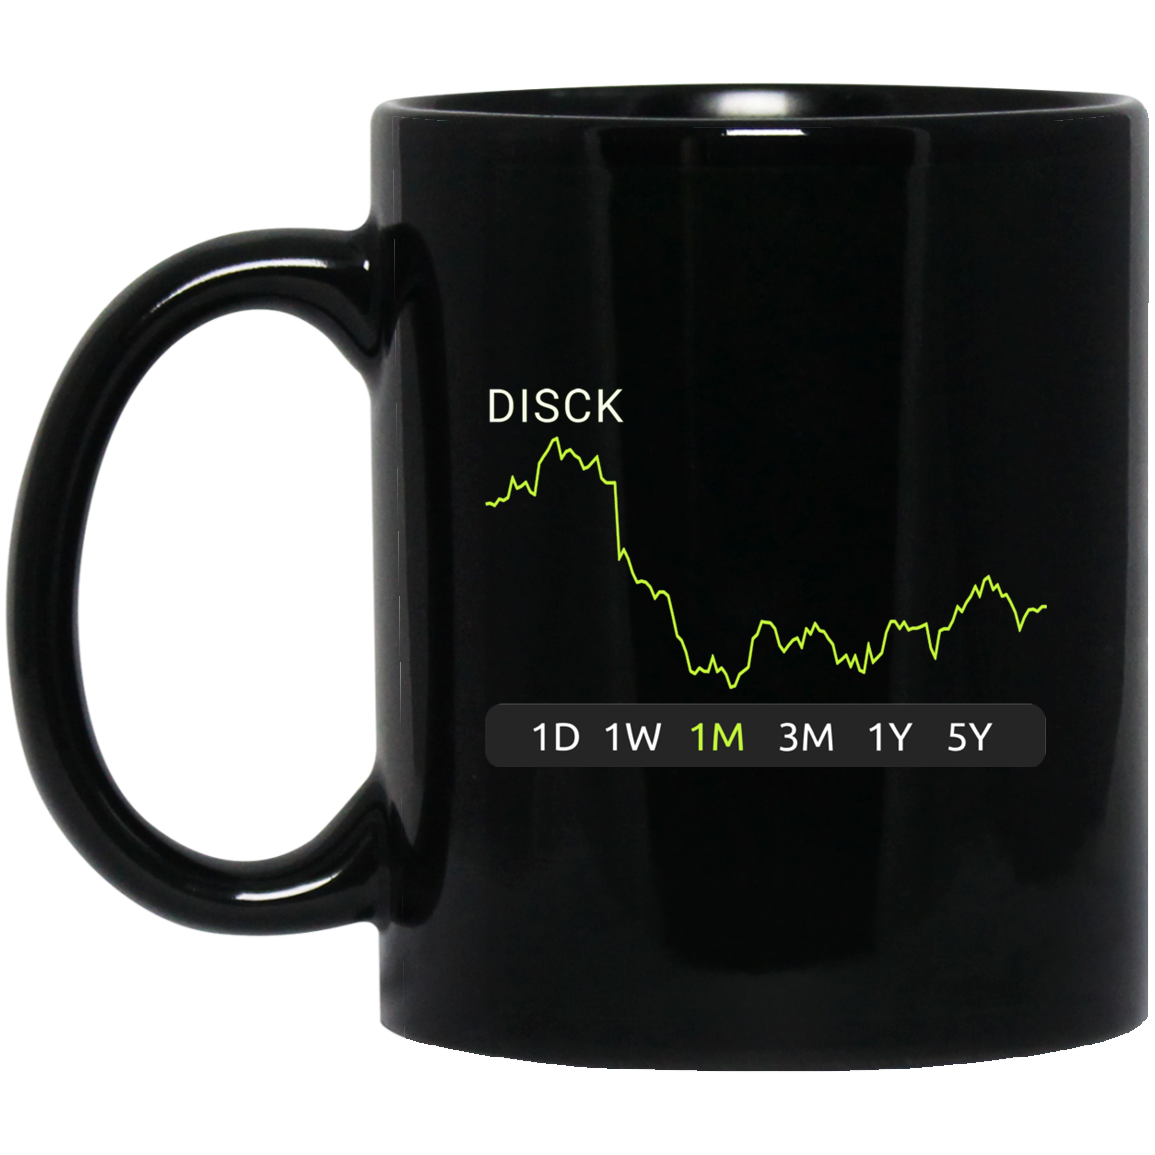 DISCK Stock 1m Mug